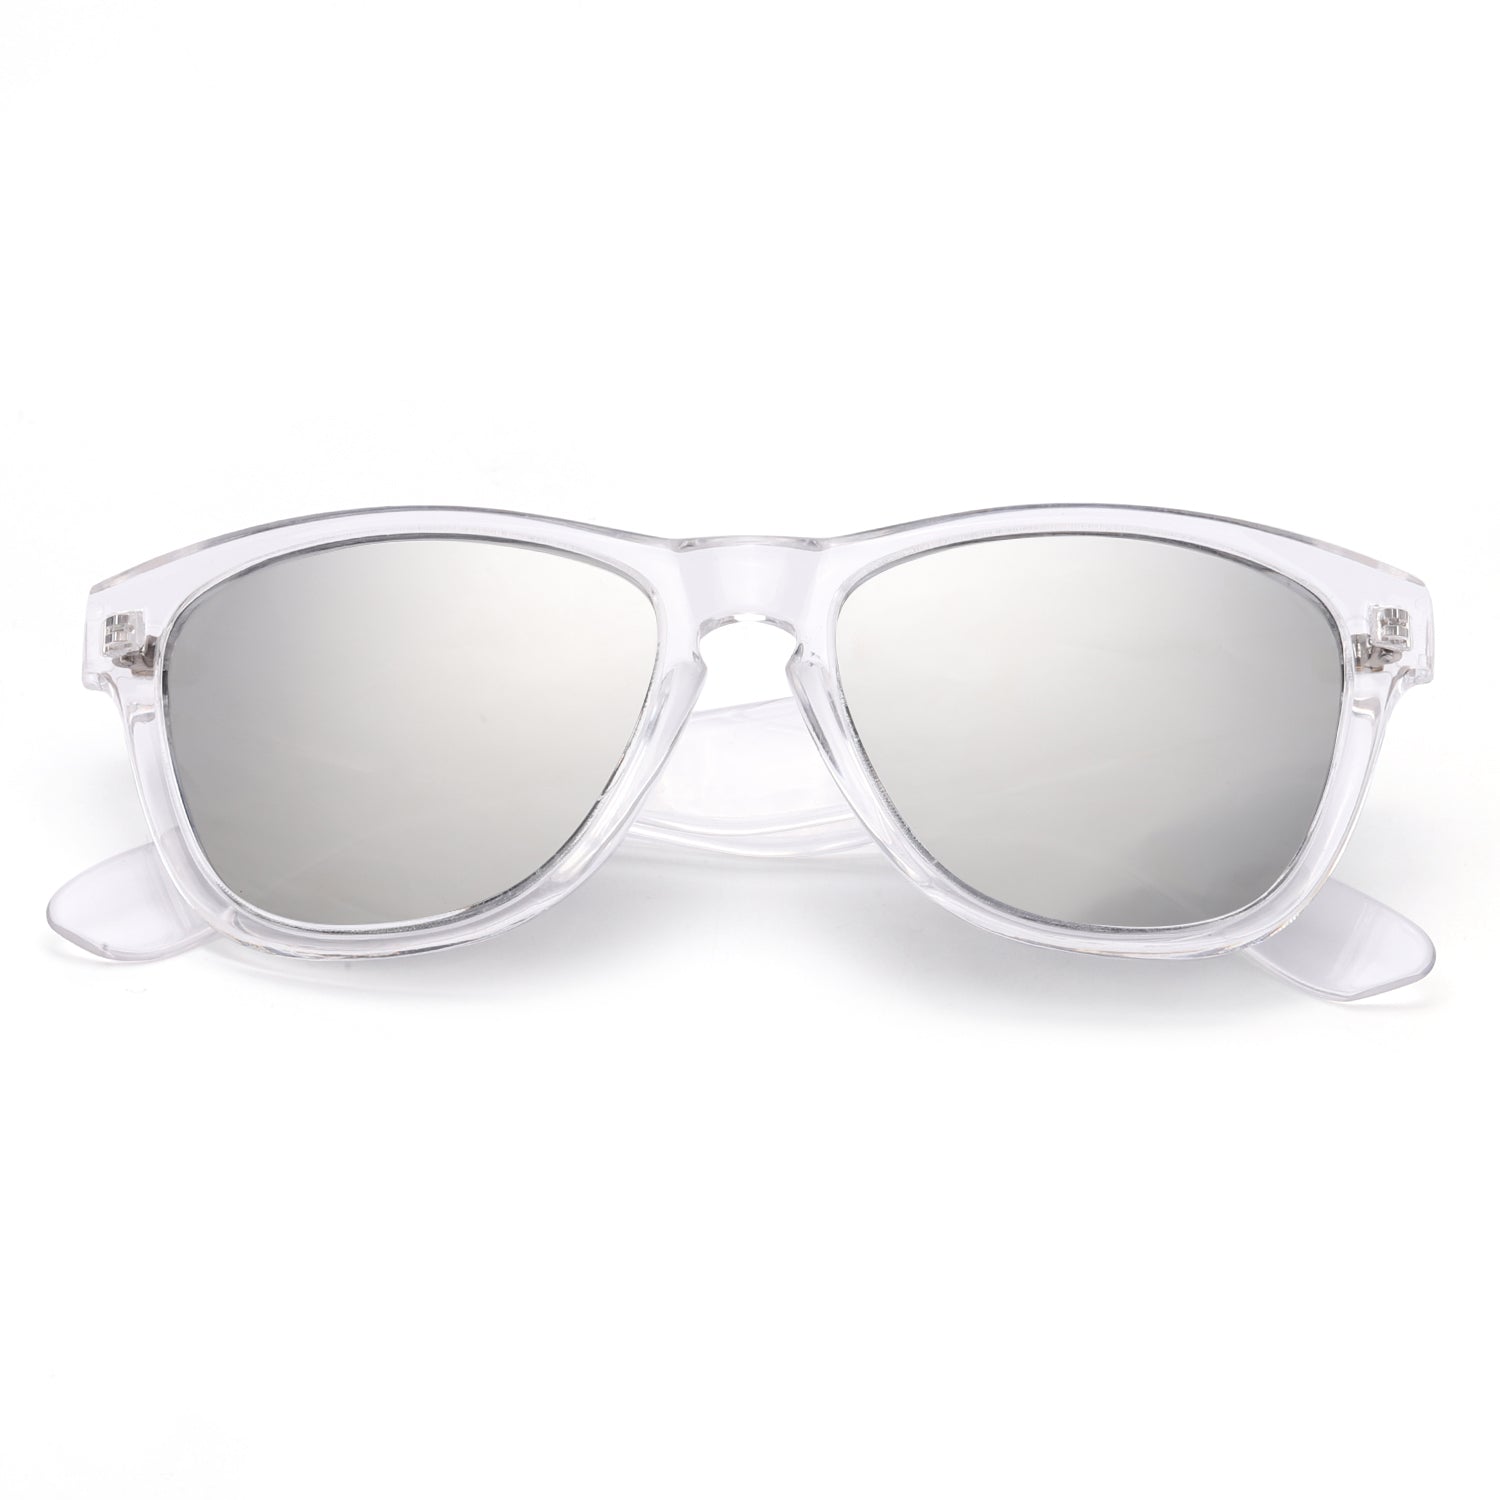 TJUTR Unisex Square Polarized Sunglasses for Outdoor Eyewear, Transparent